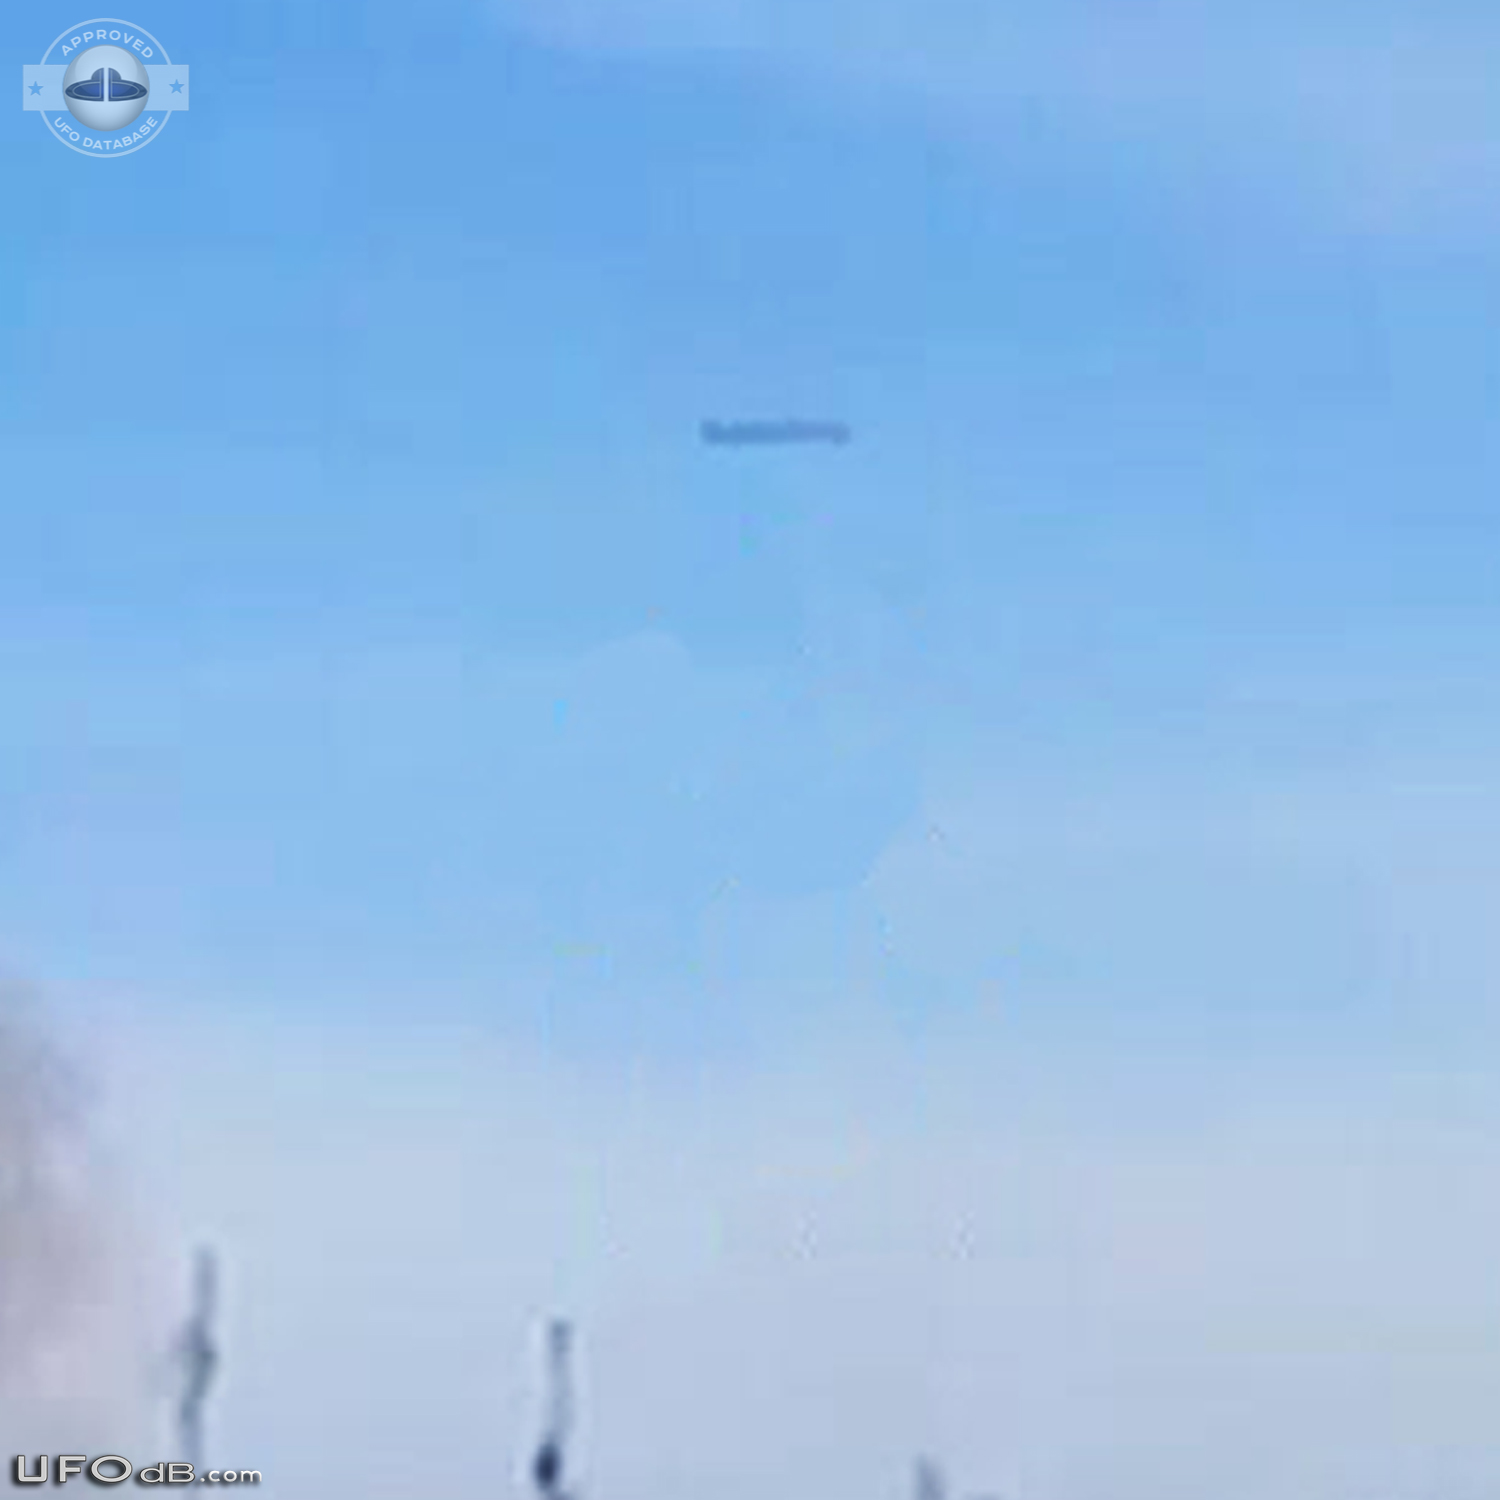 300 M Cylinder UFO Sky Dreadnaught near Russia/Ukraine Conflict - 2014 UFO Picture #559-4